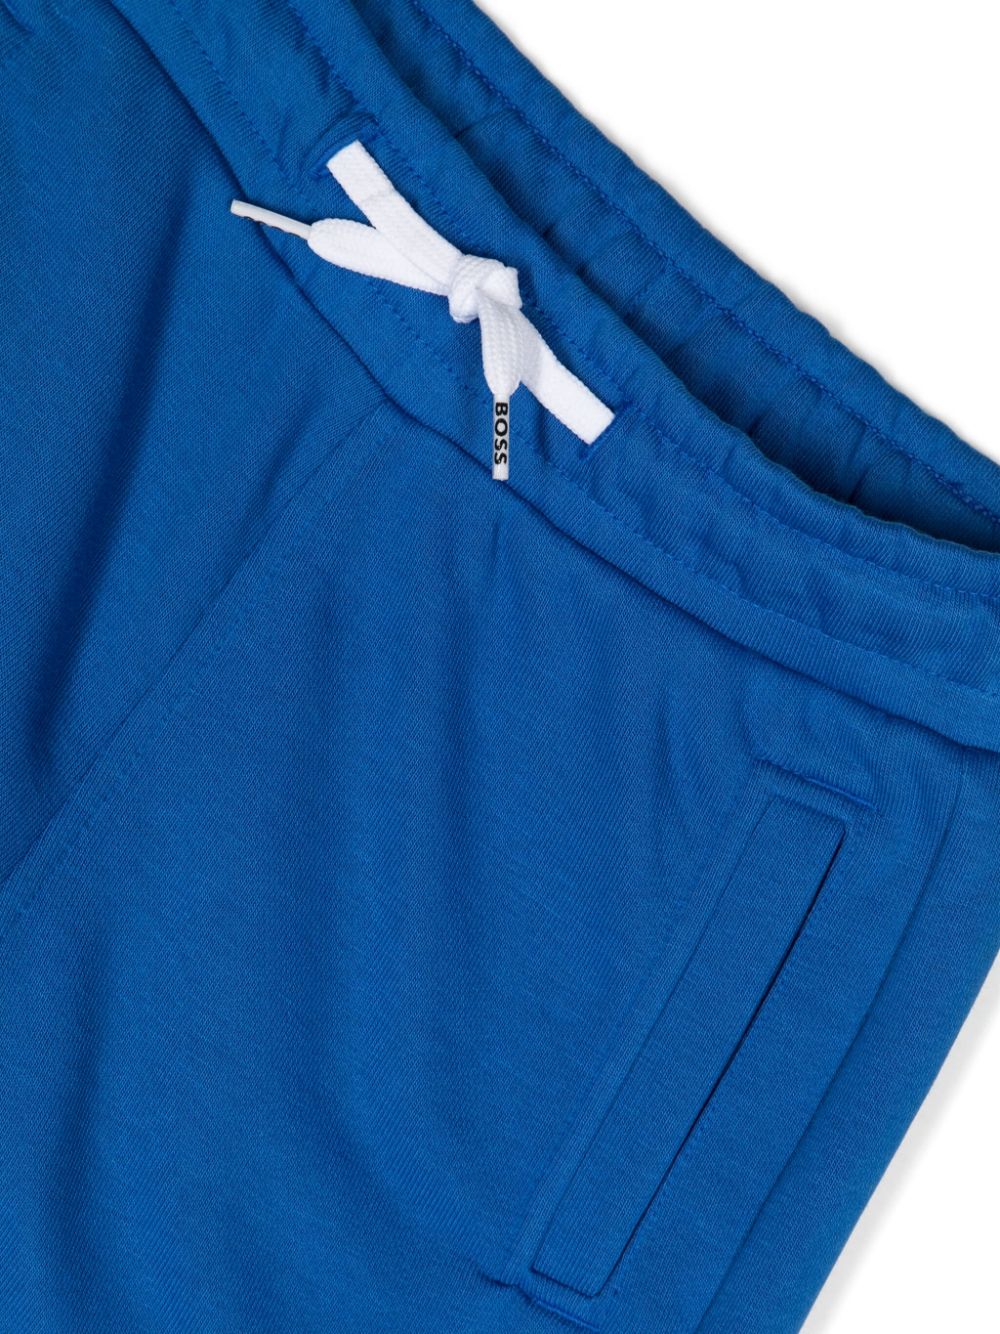 Blue Bermuda shorts for boys with logo